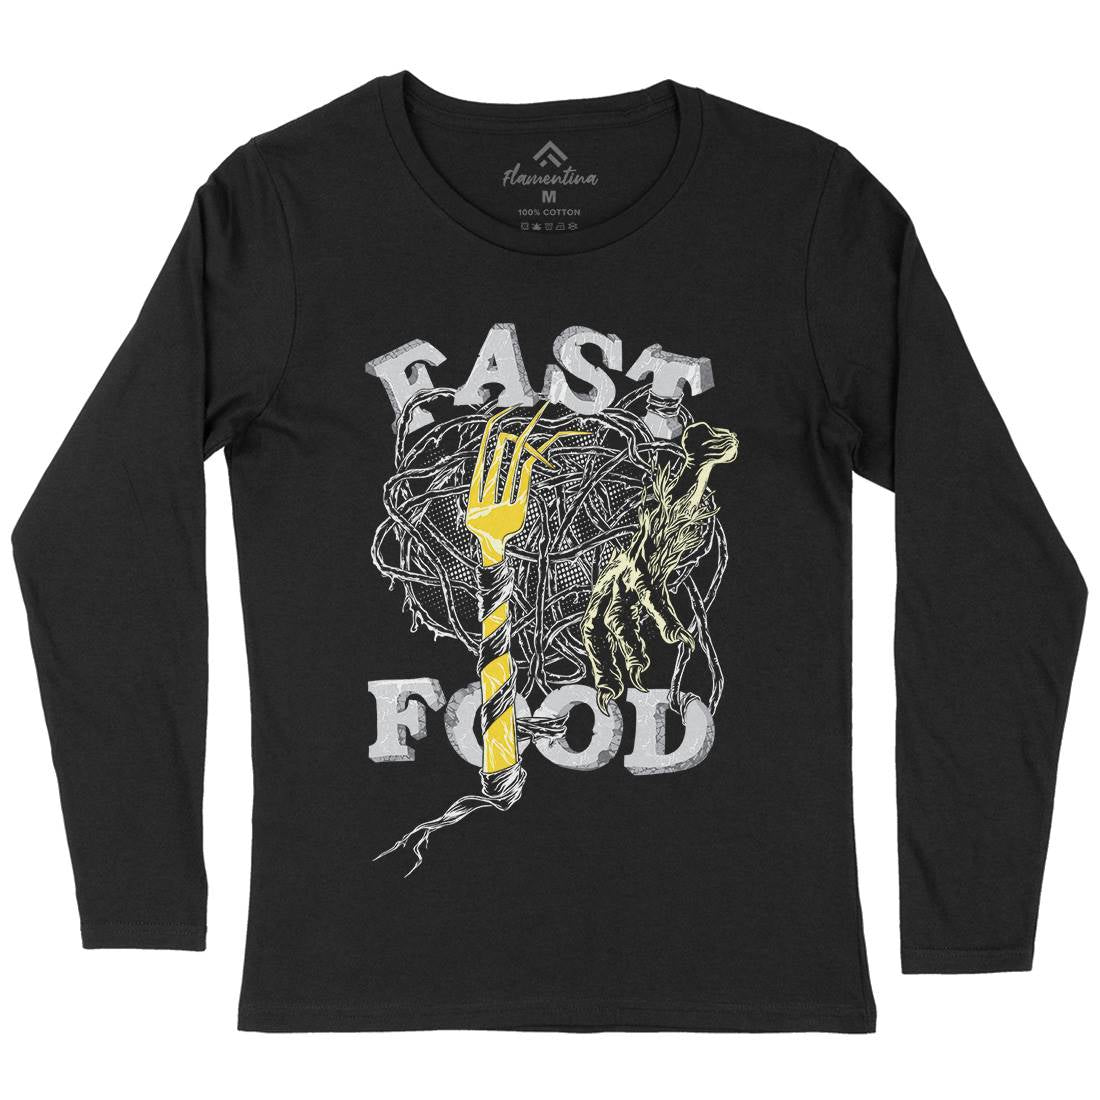 Fast Womens Long Sleeve T-Shirt Food C931